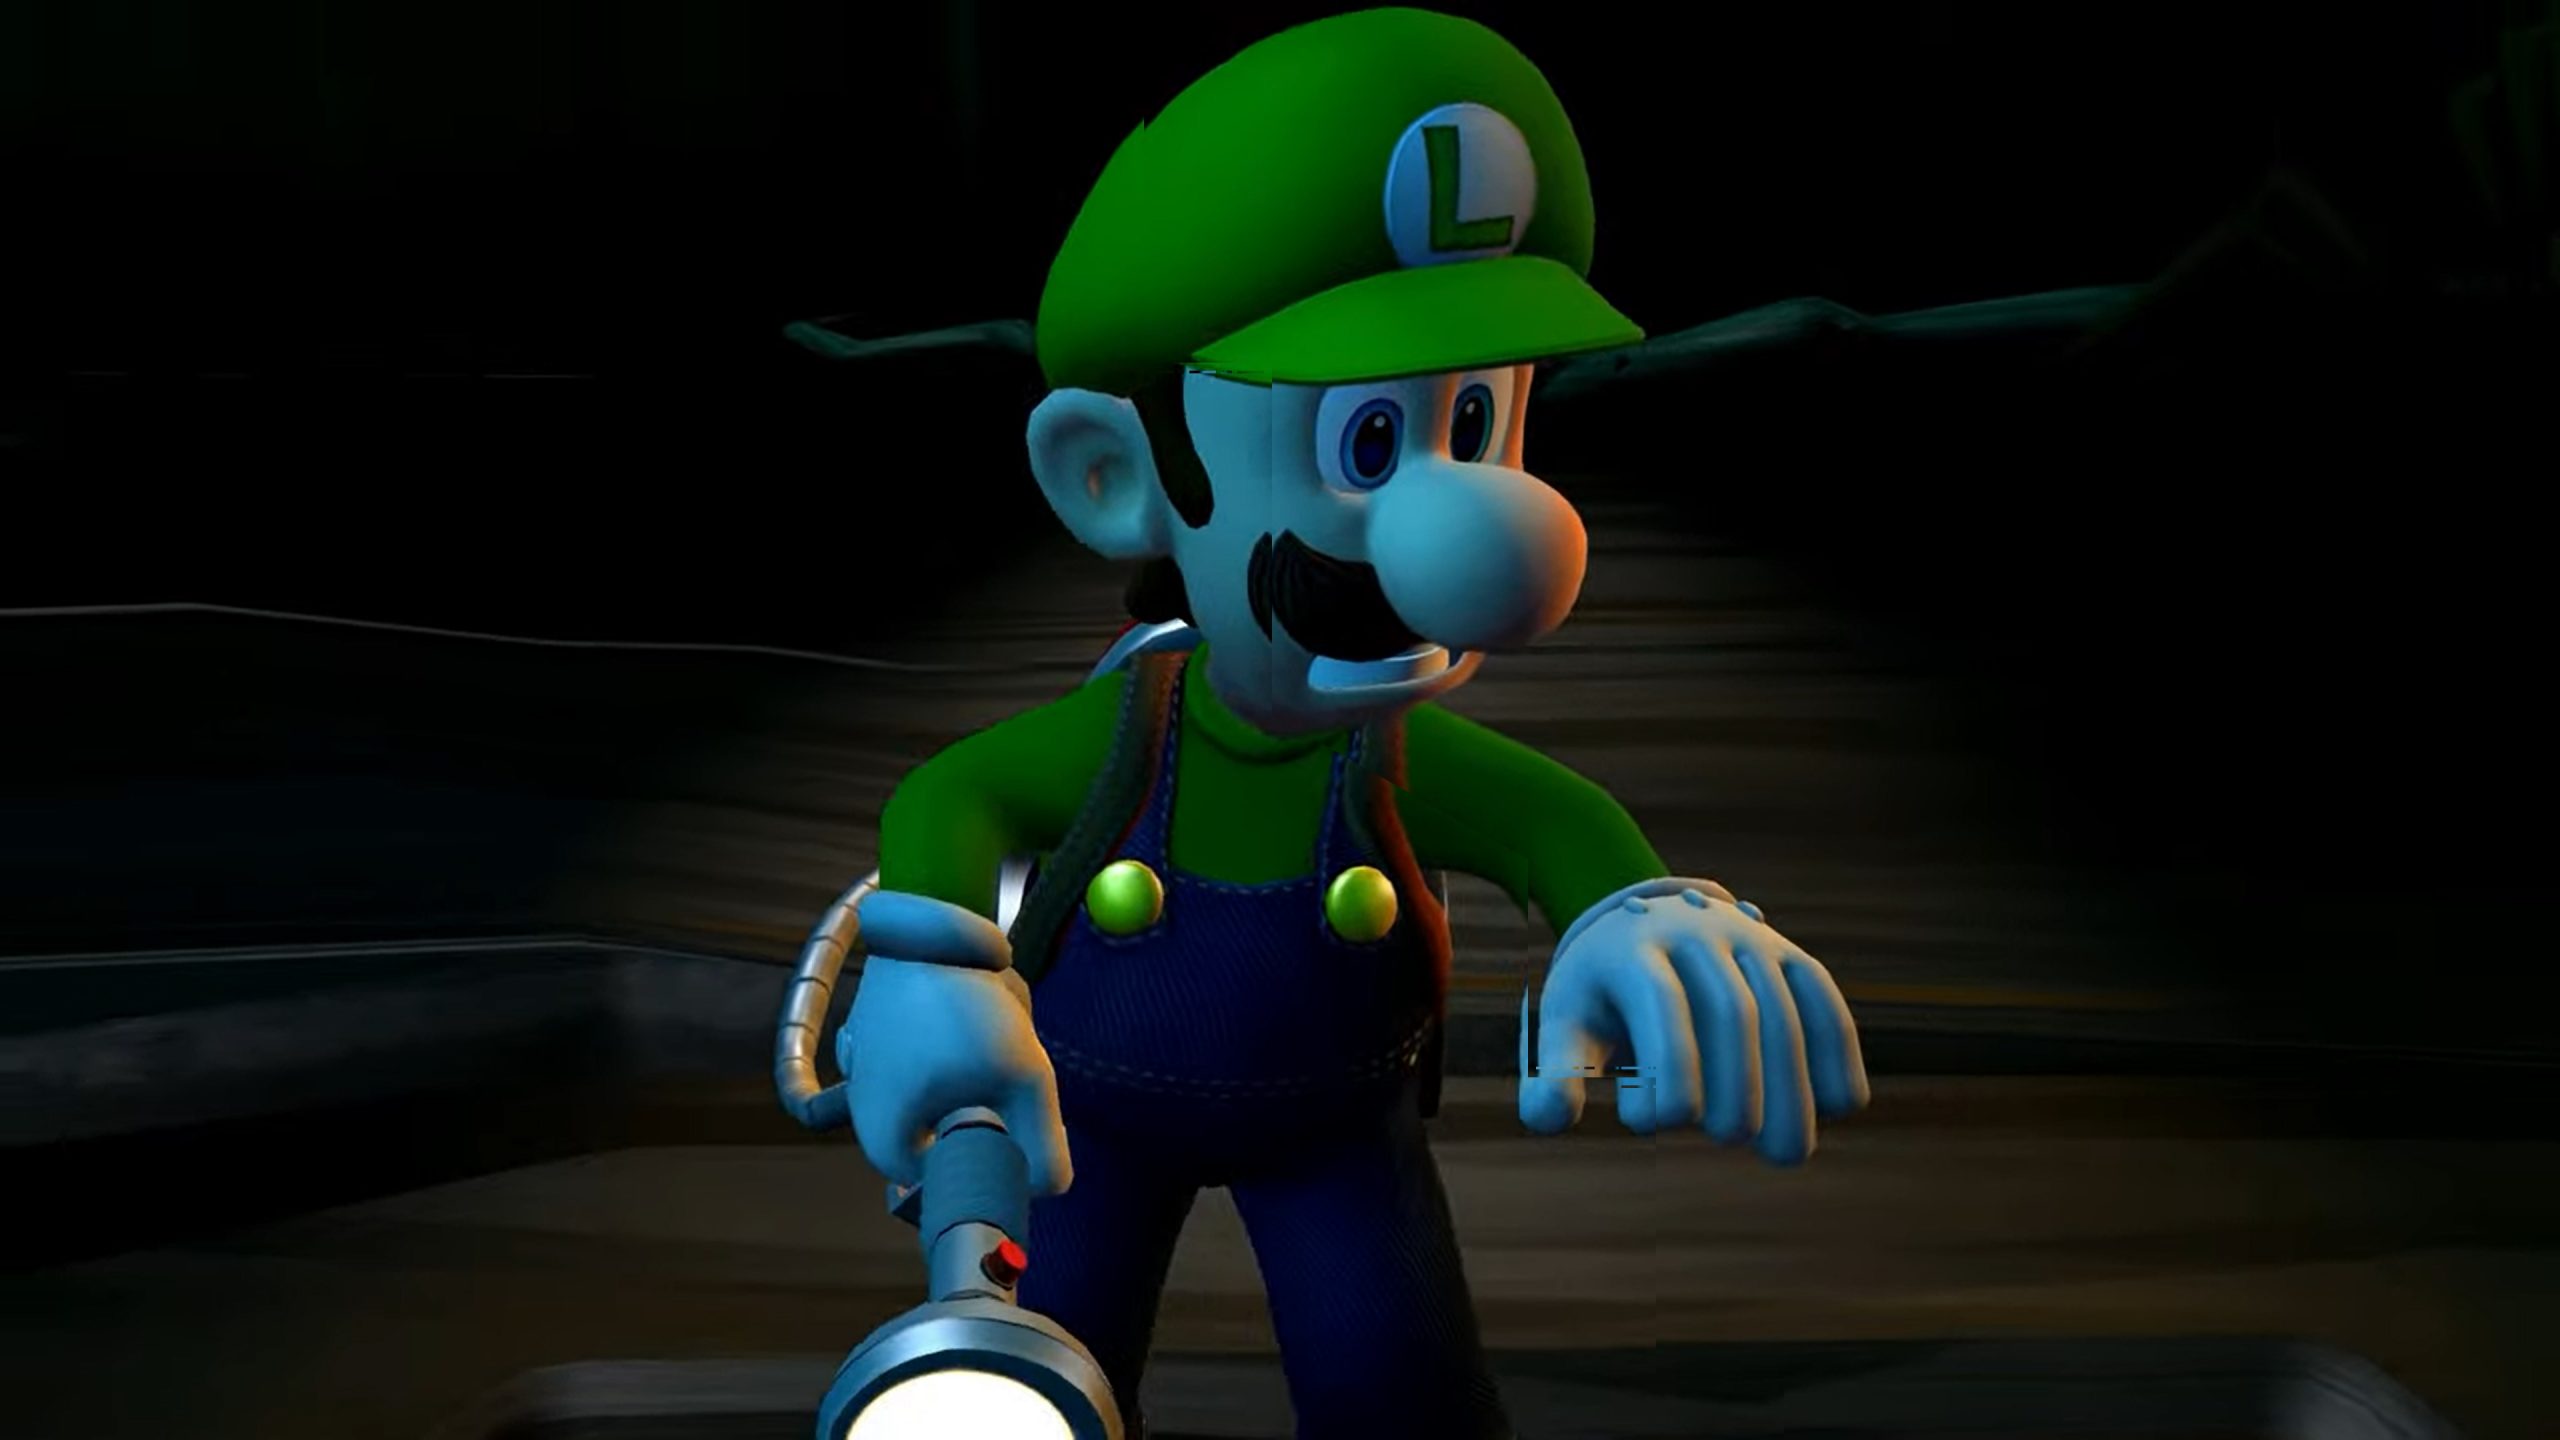 Luigi's Mansion: Dark Moon